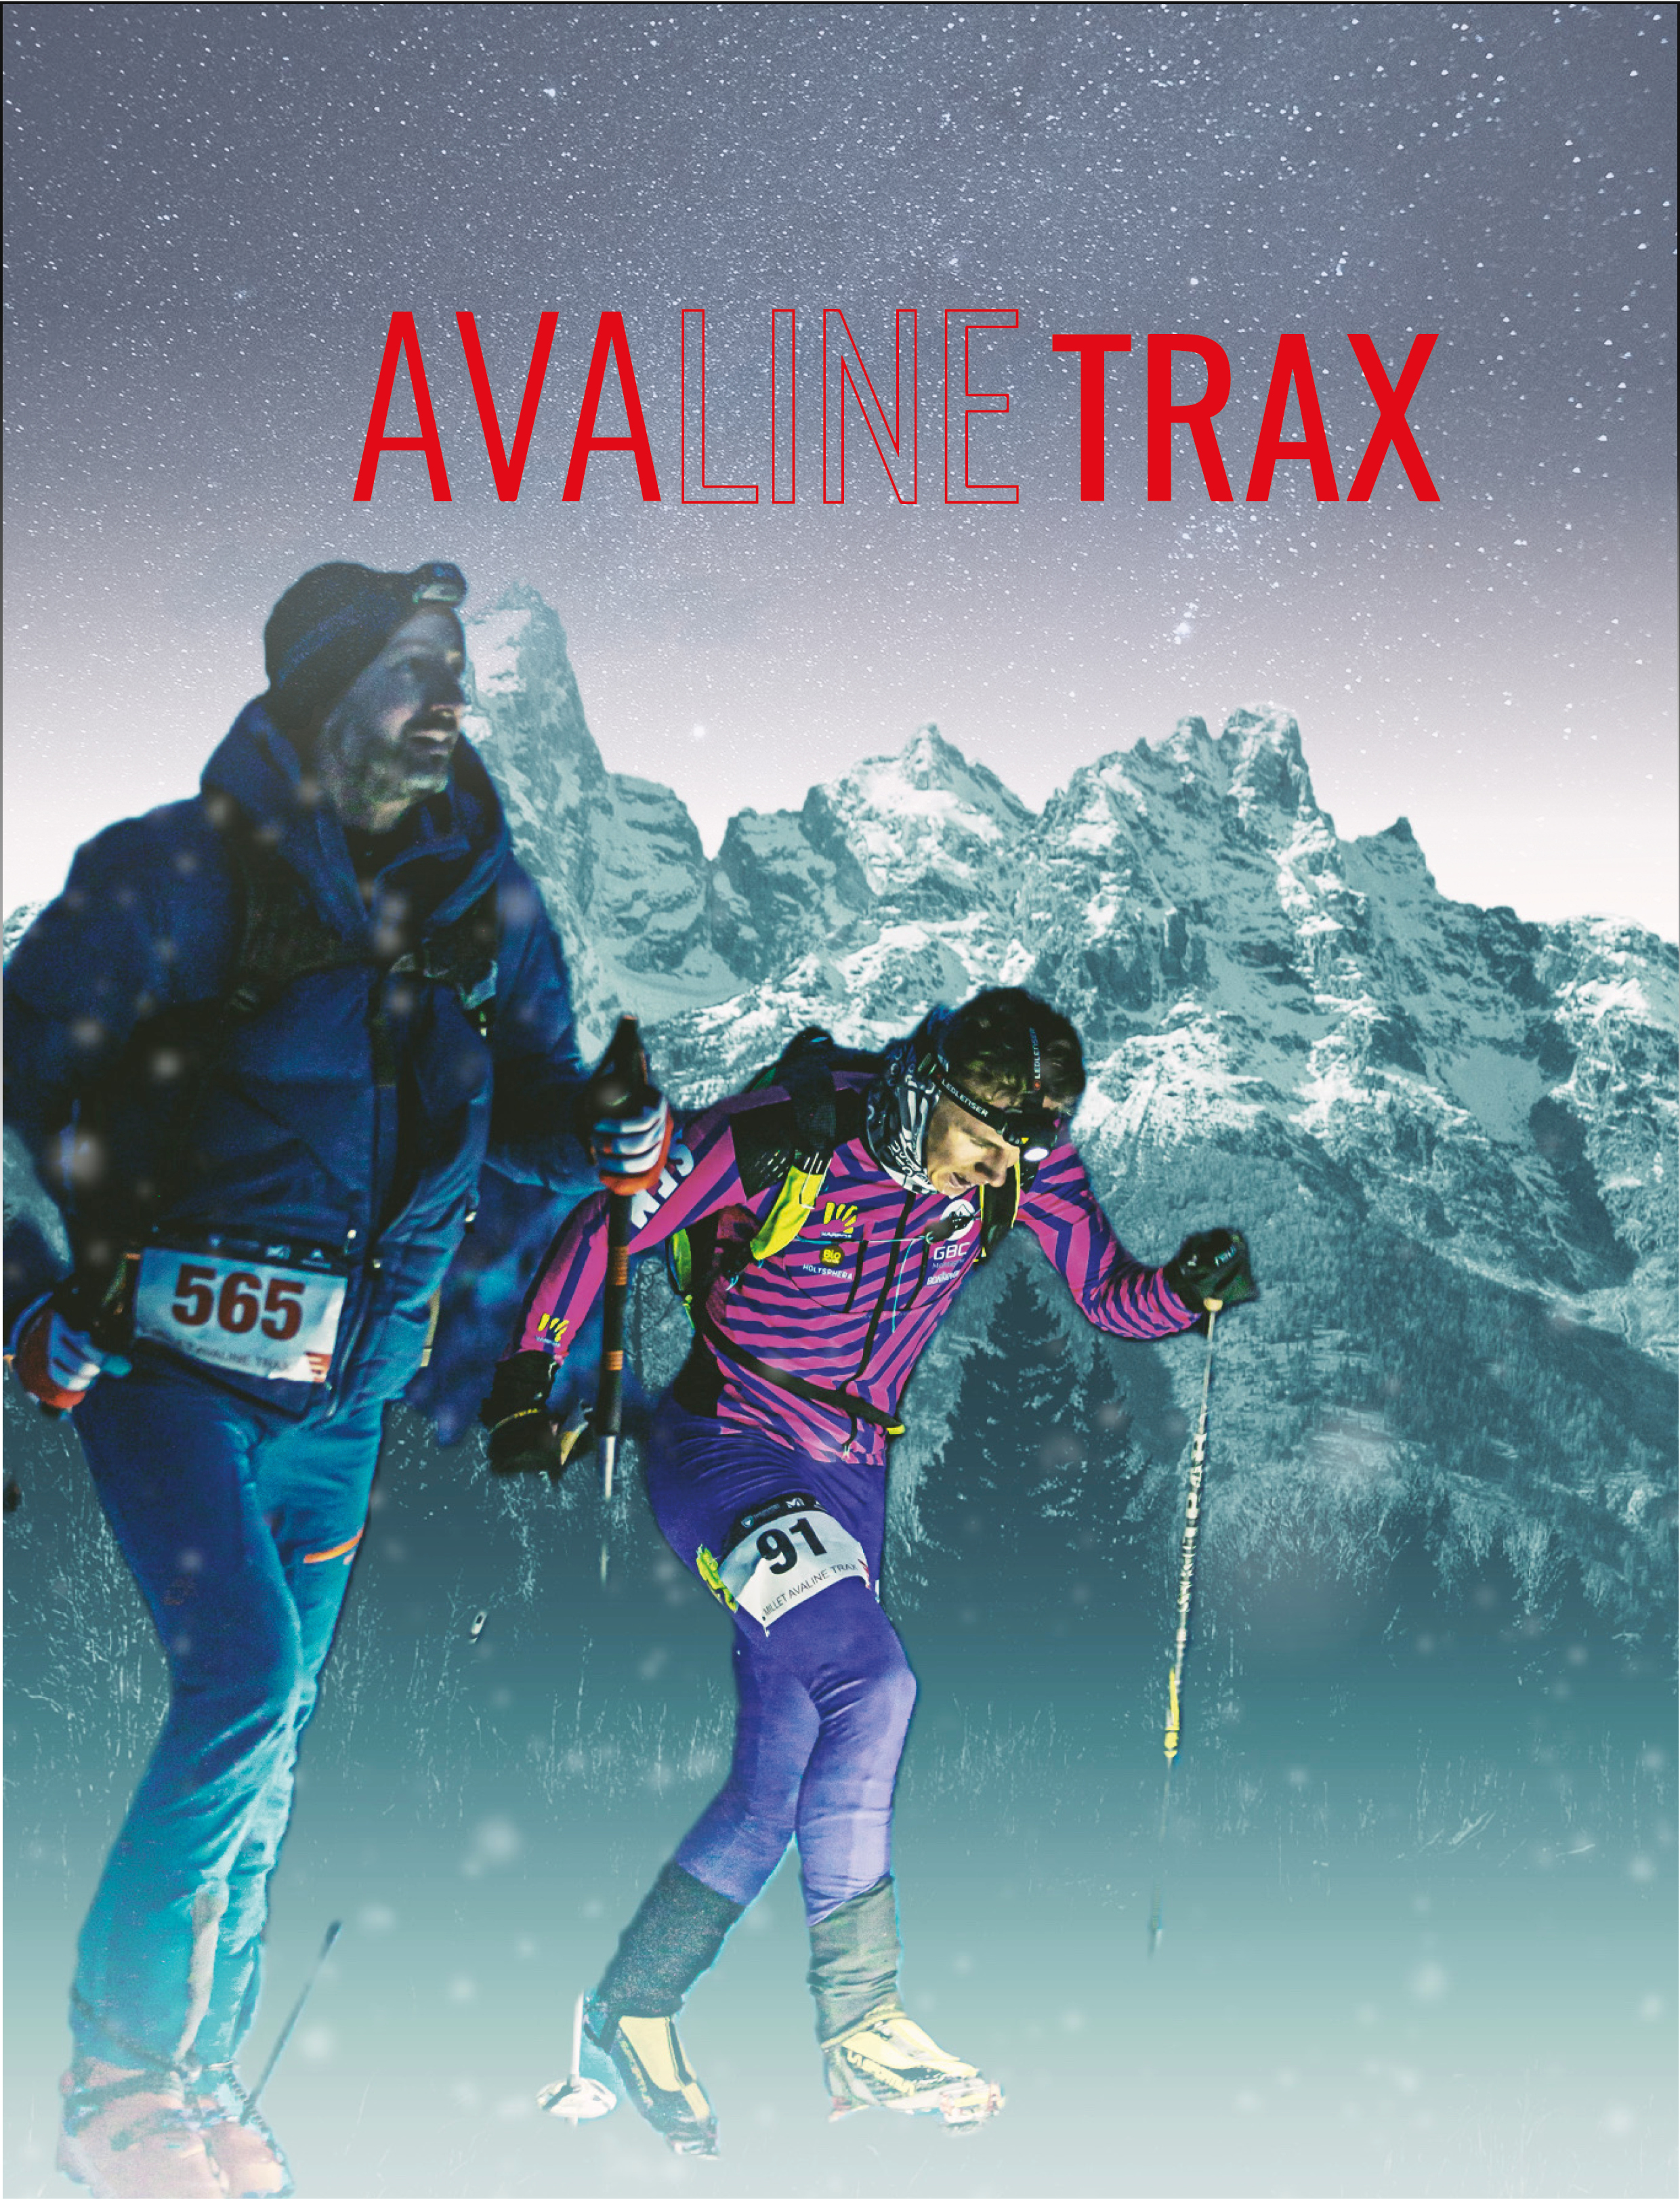 Ski touring night race "Avaline Trax" FINAL RACE